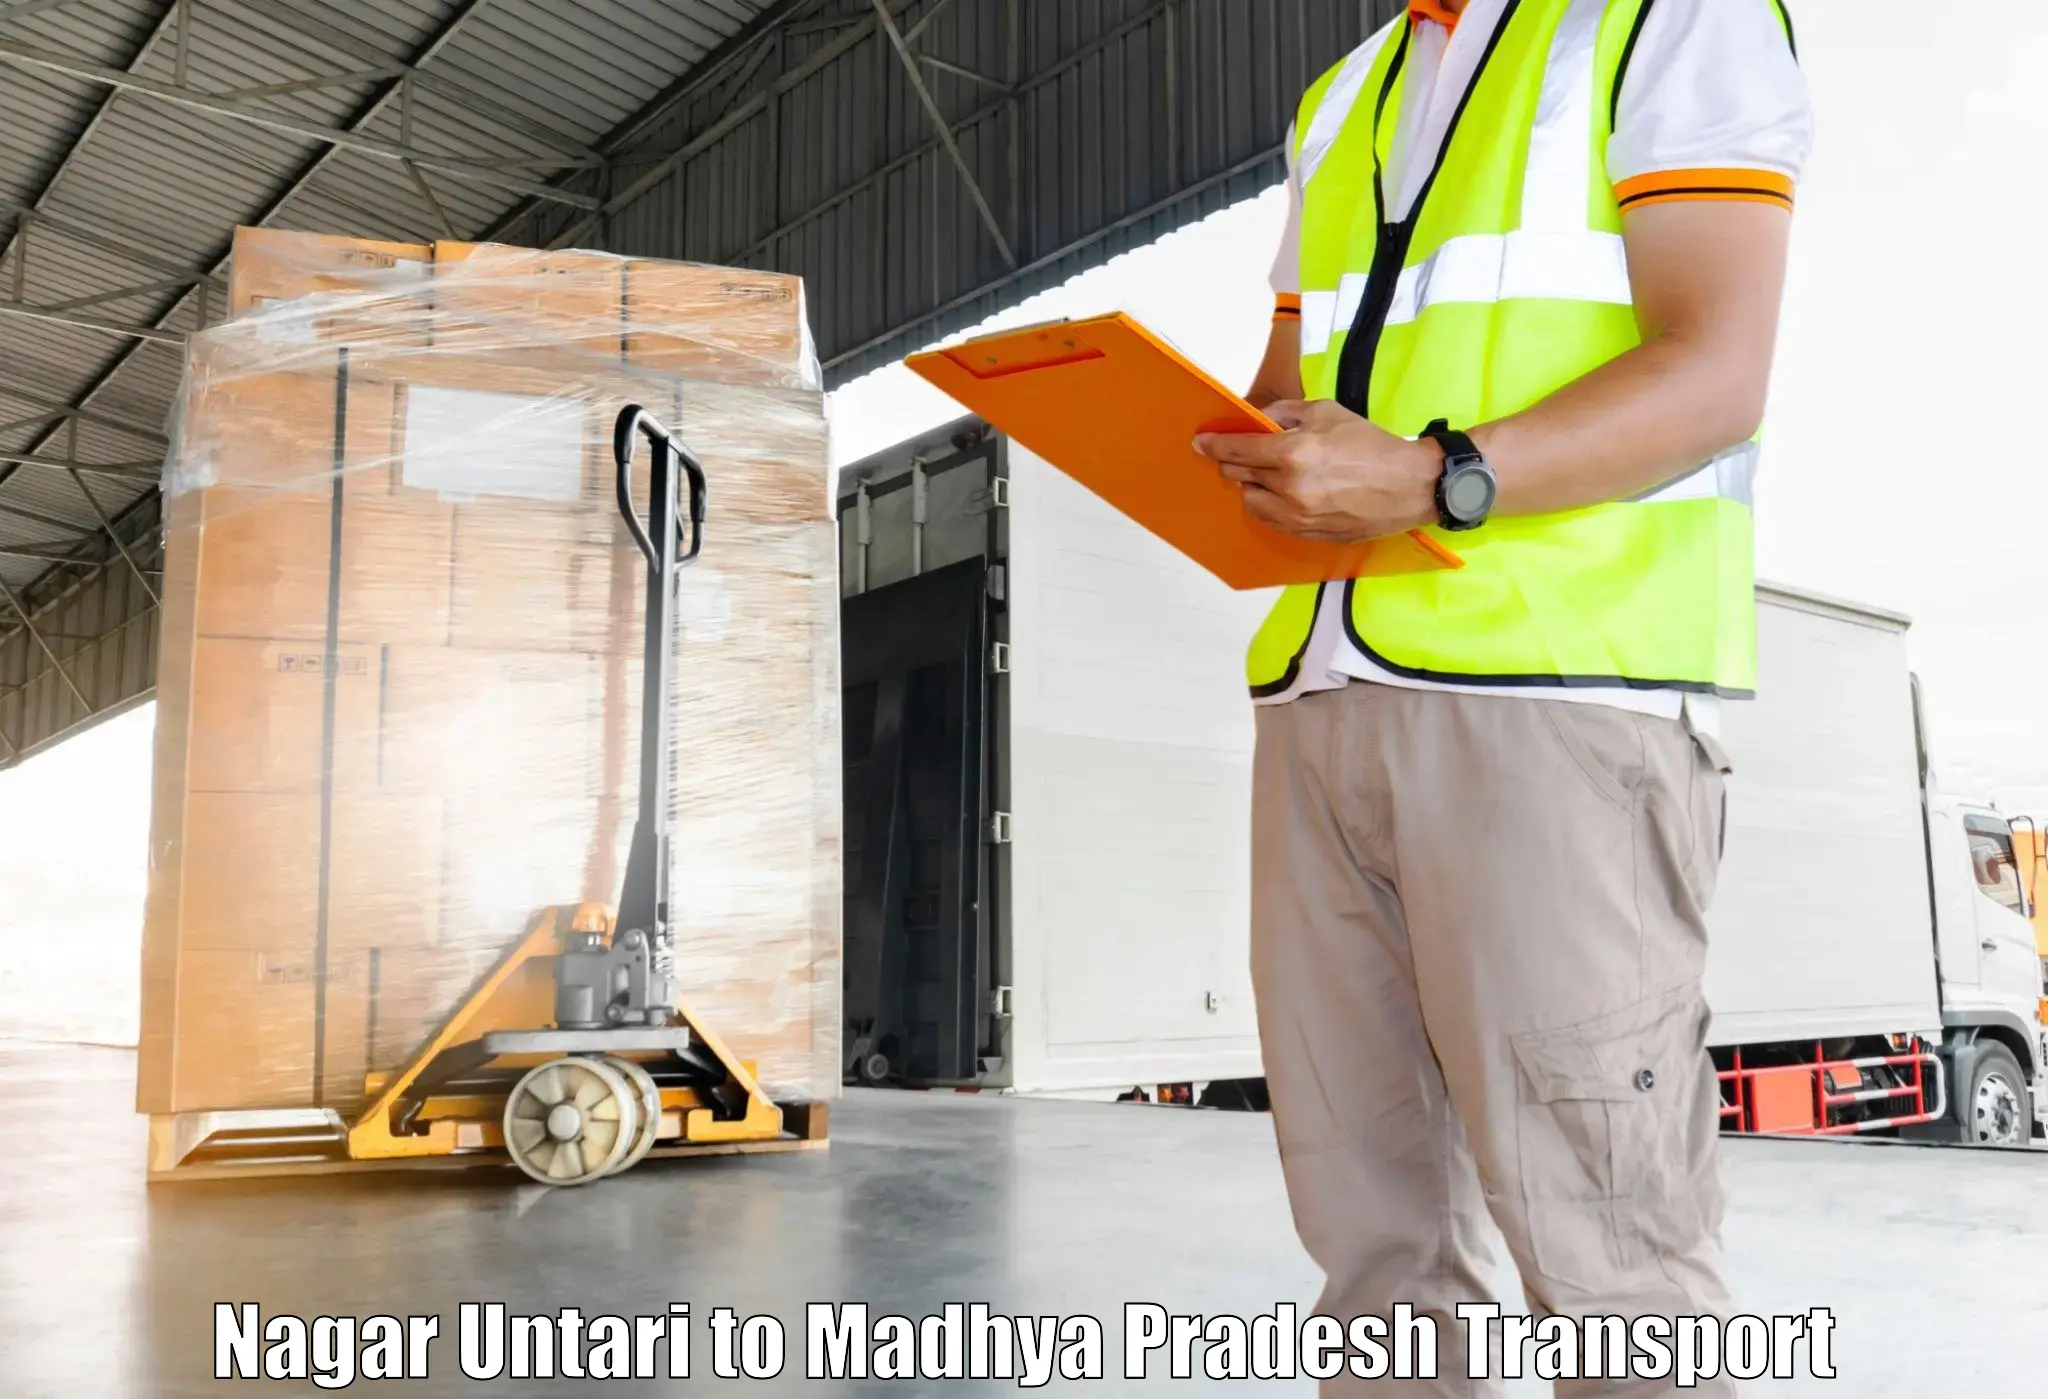 Truck transport companies in India in Nagar Untari to Garh Rewa